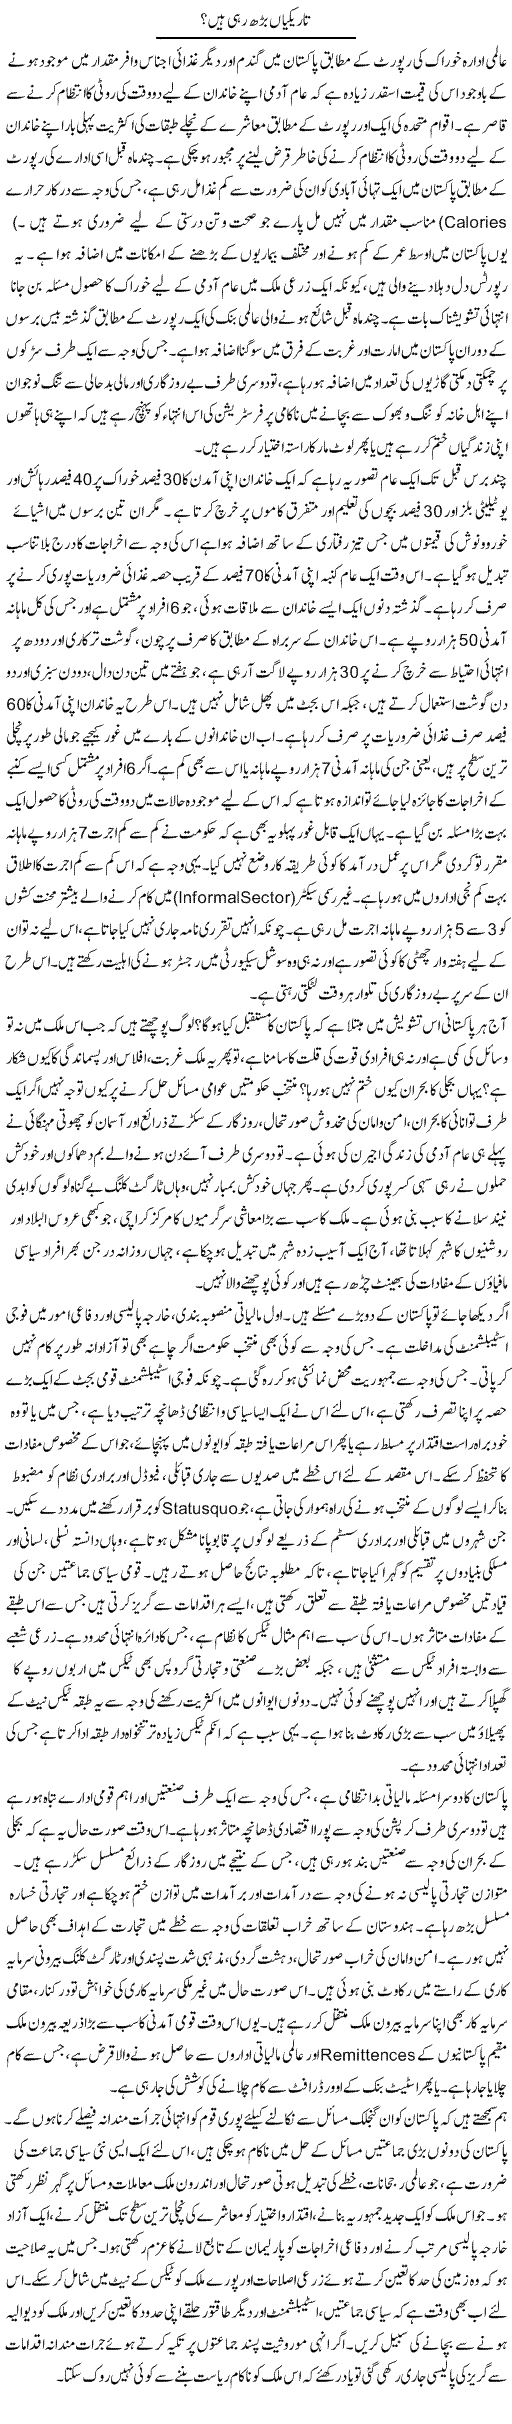 Food Problems in Pakistan Express Column Muqtada Mansoor 28 March 2011